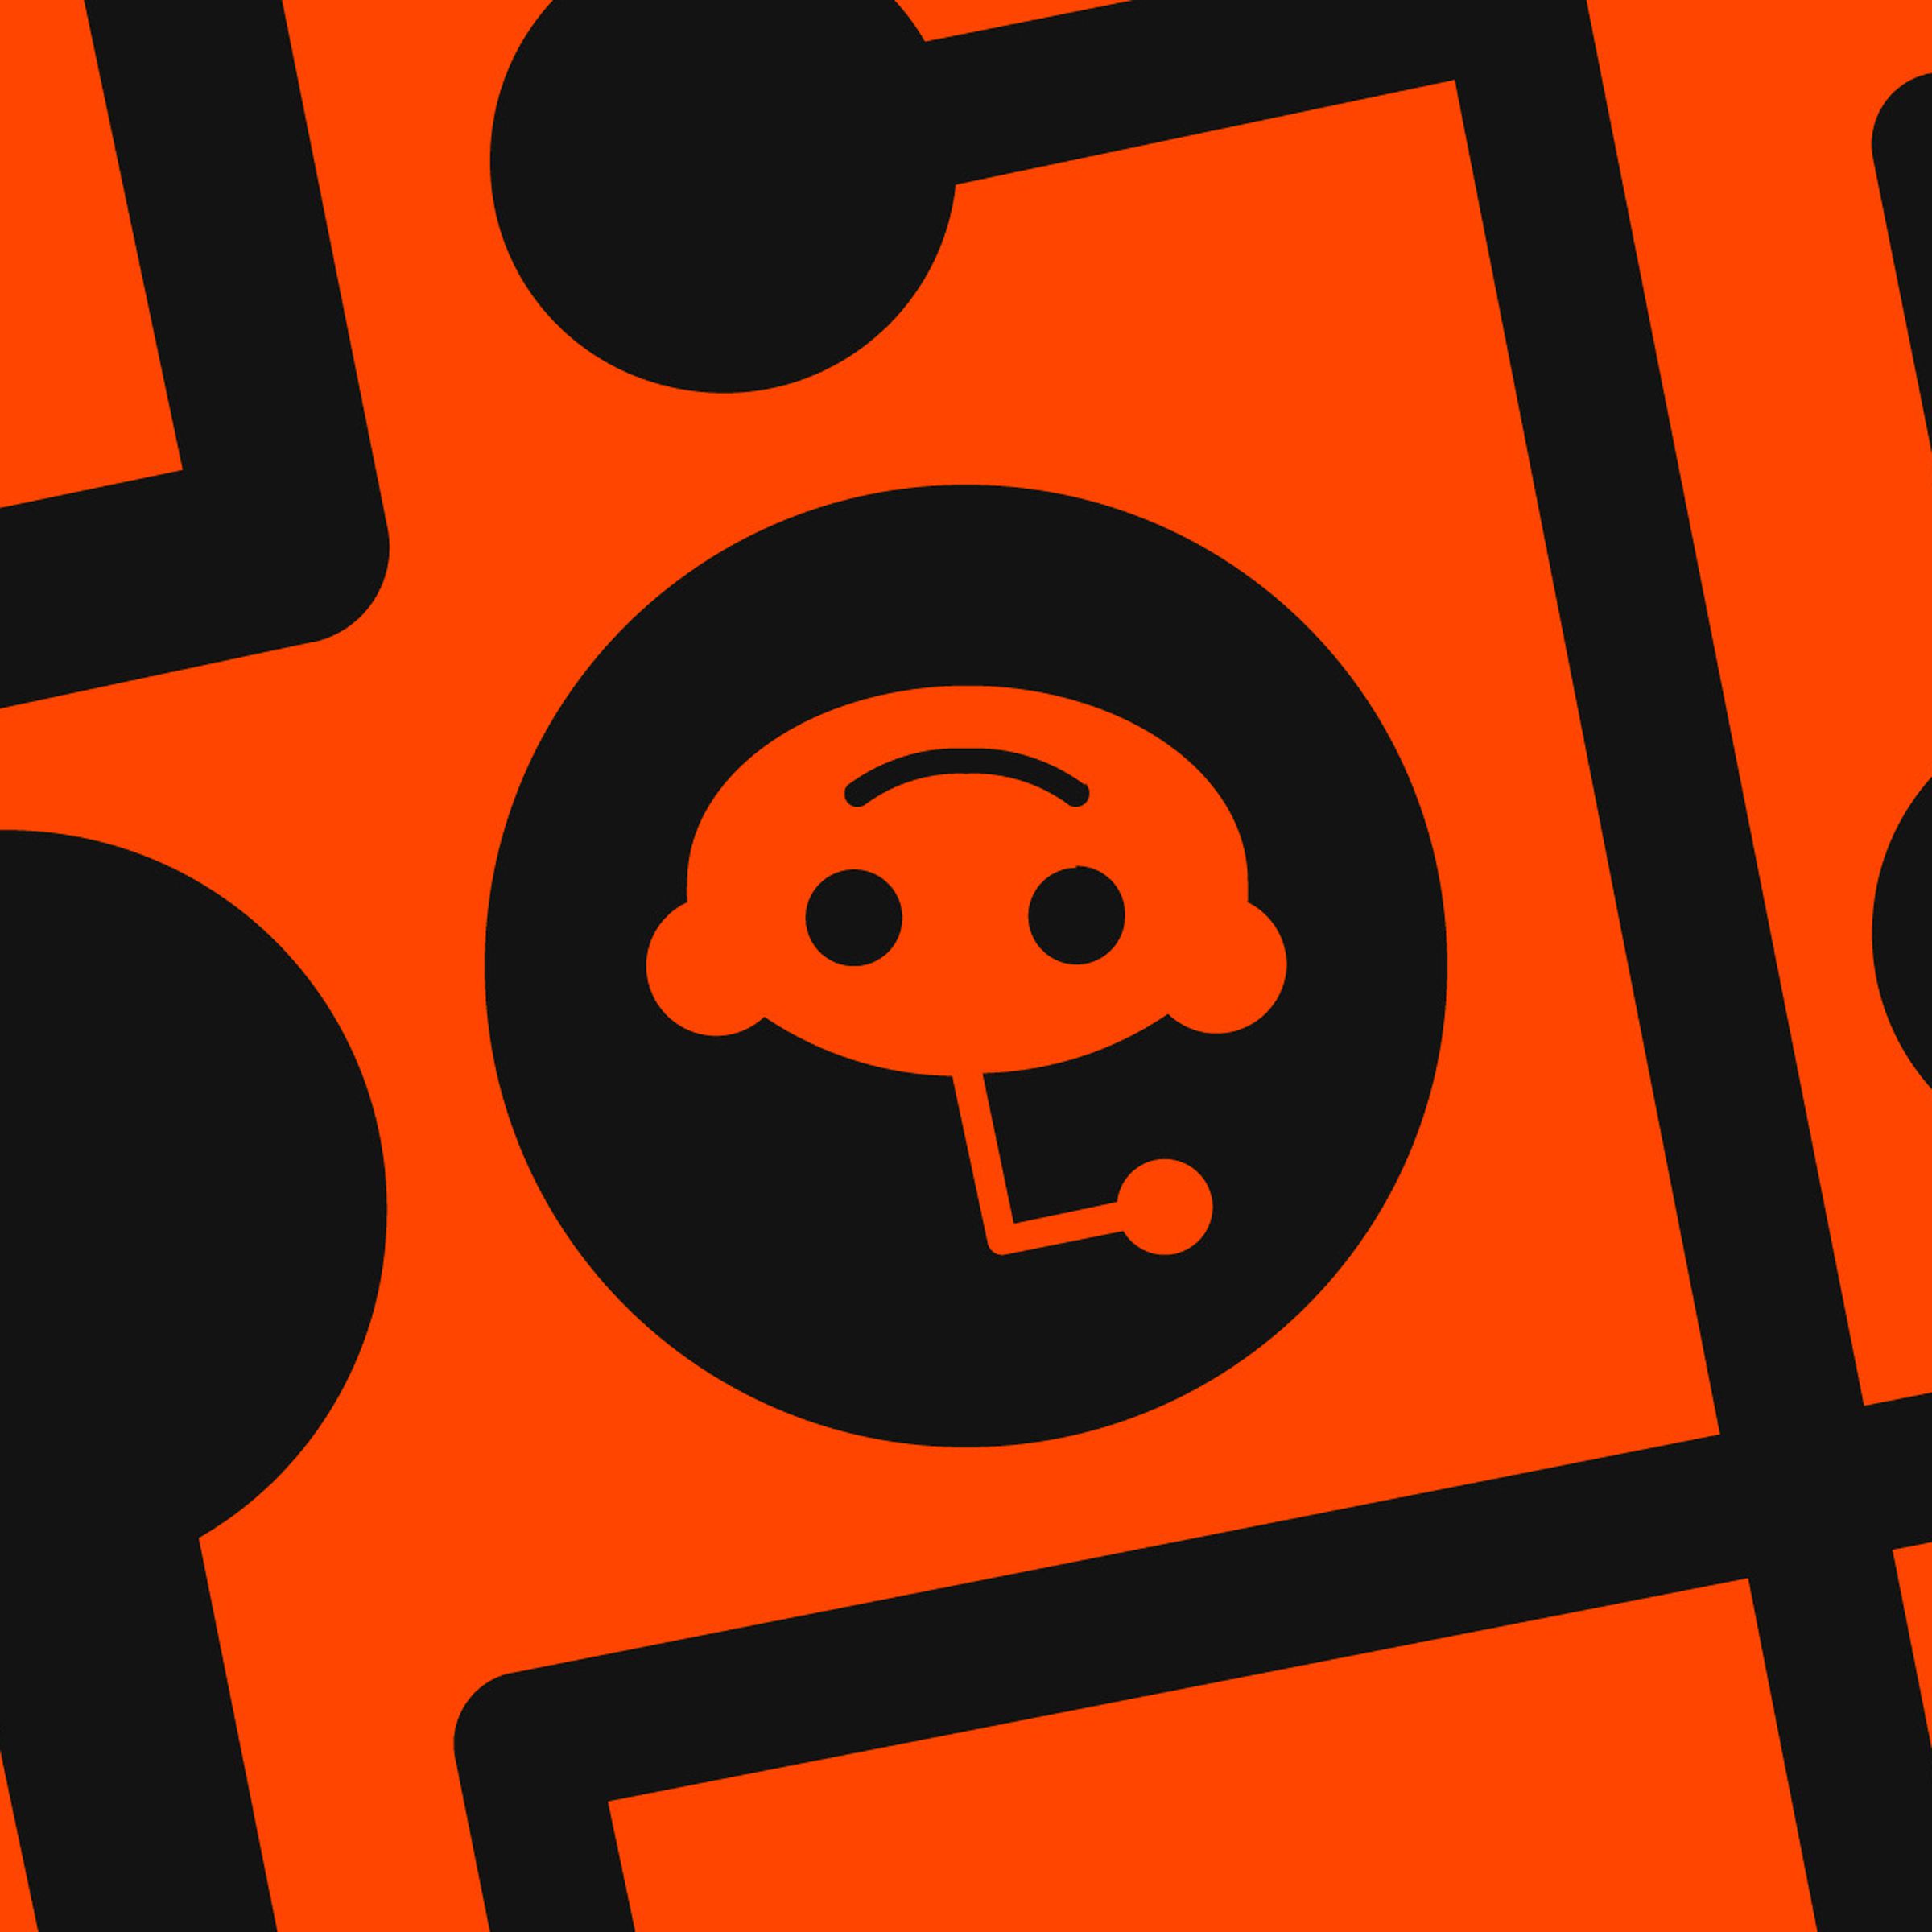 A Reddit logo shown upside down on an orange background.